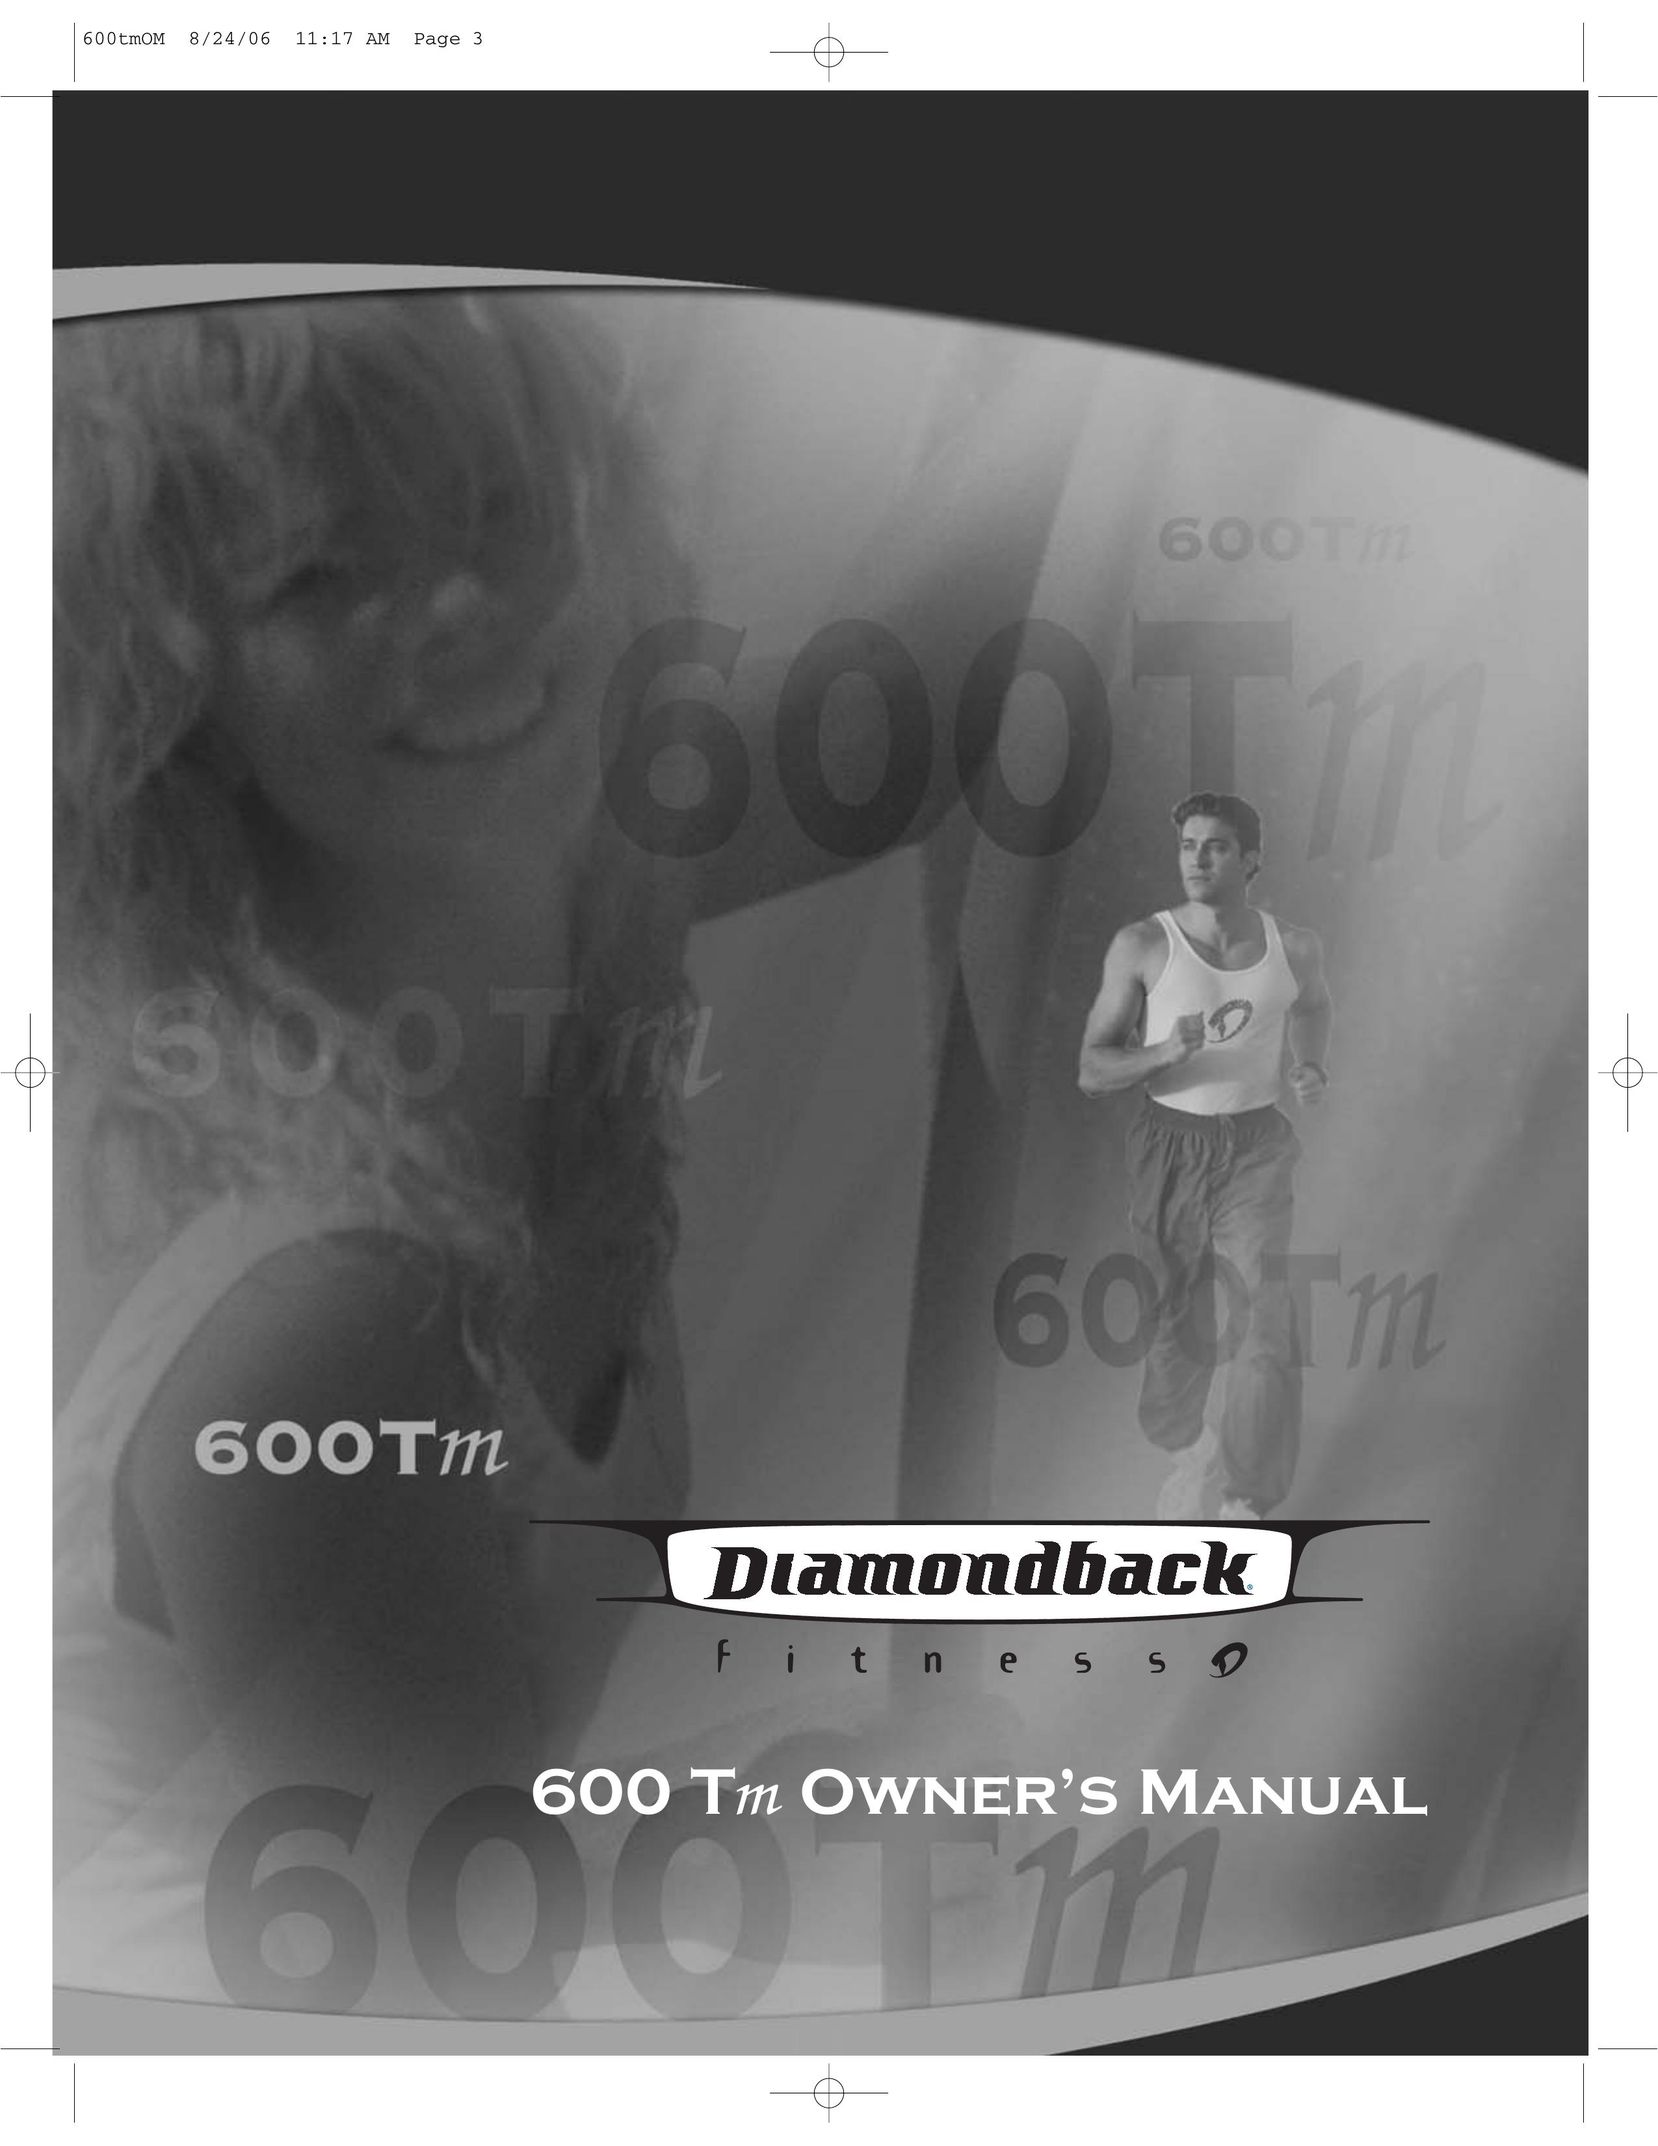 Diamondback 600 Tm Treadmill User Manual